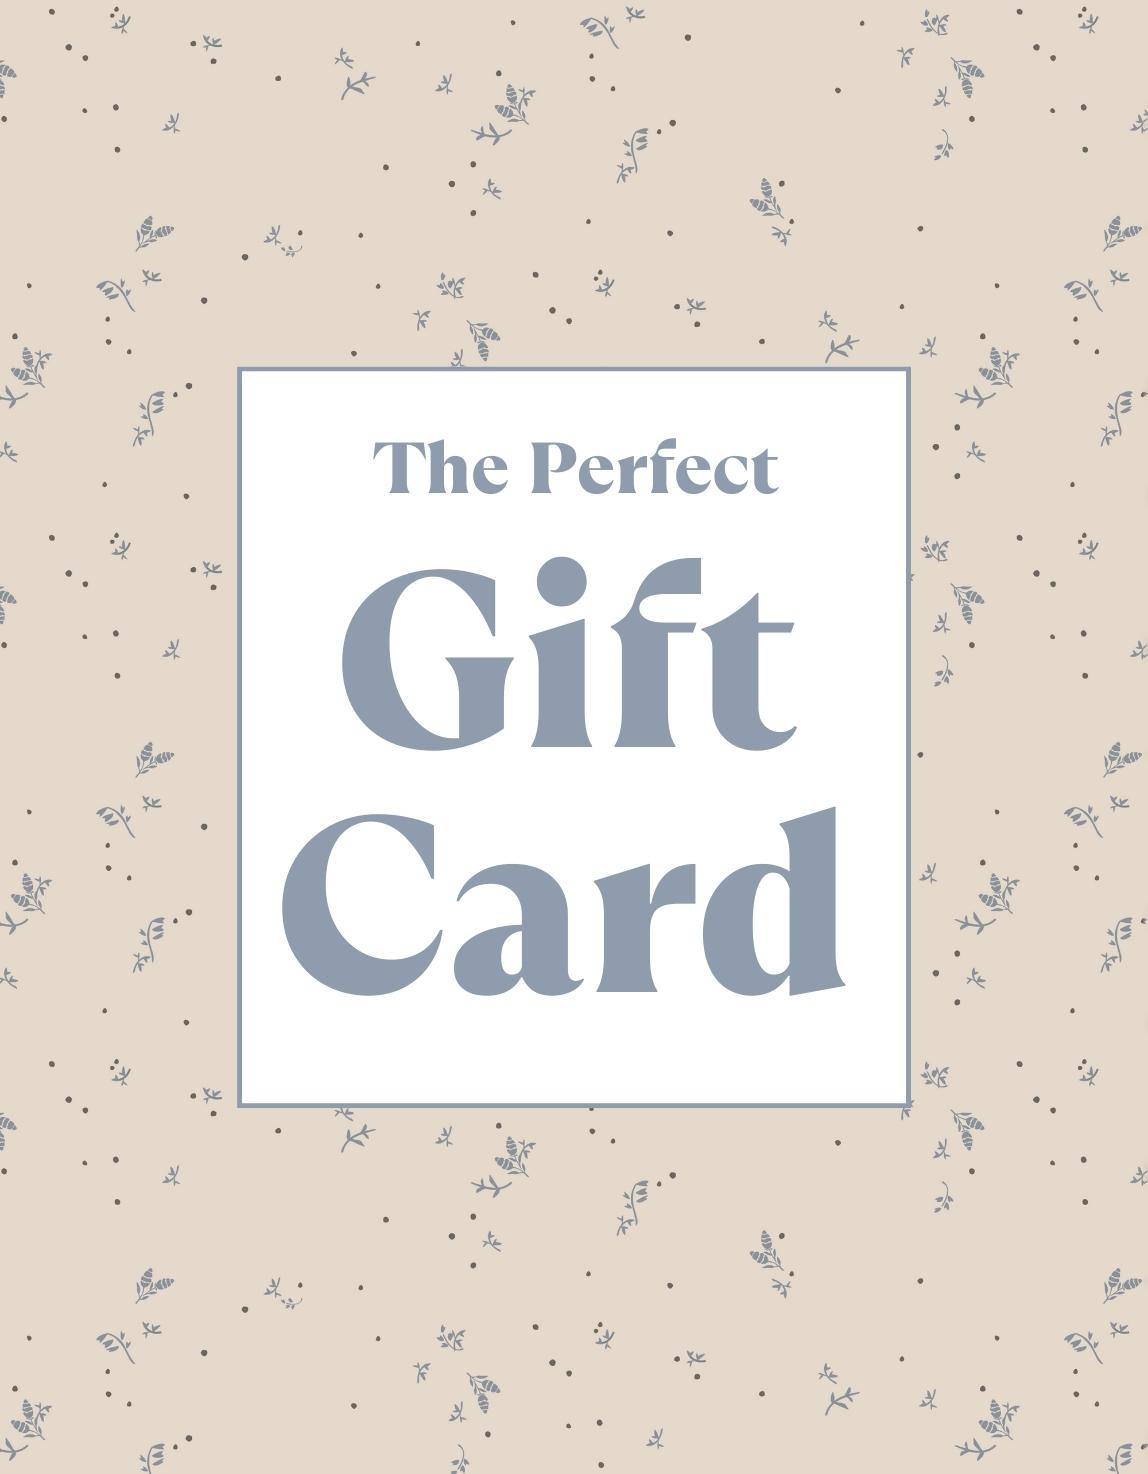 THE PERFECT GIFT CARD - שובר מתנה